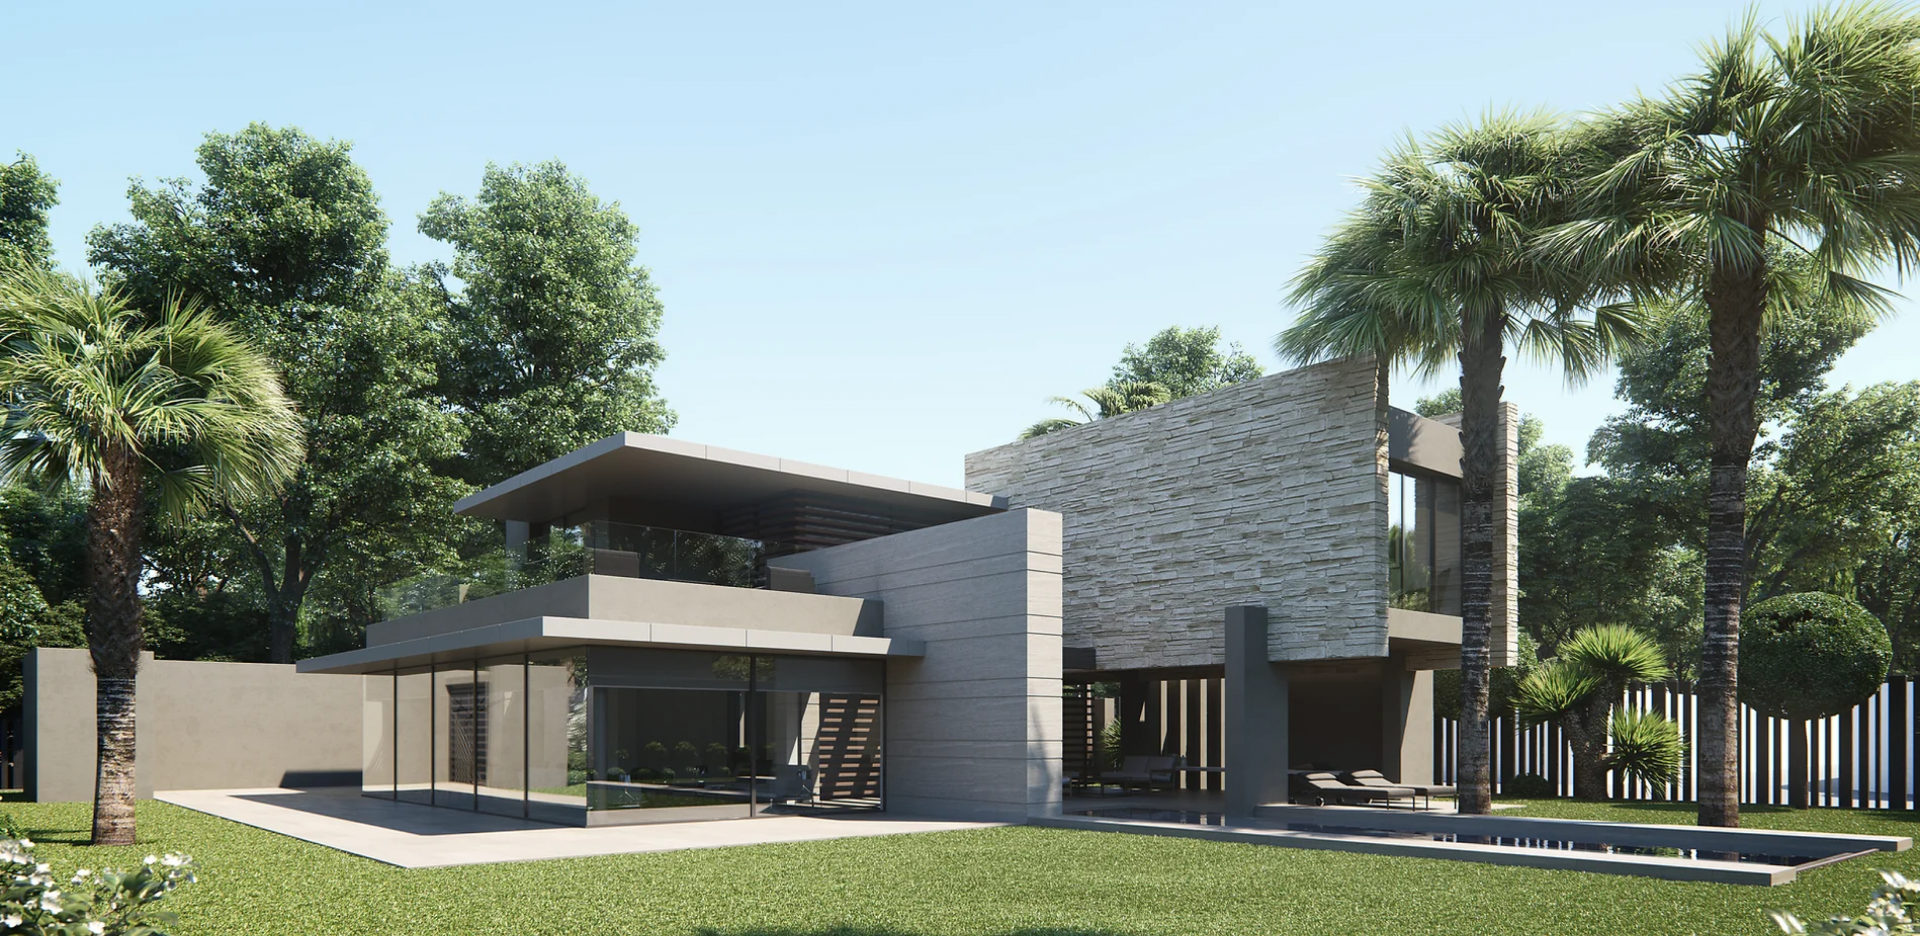 Outstanding contemporary grand villa with all the comforts in Cortijo Blanco